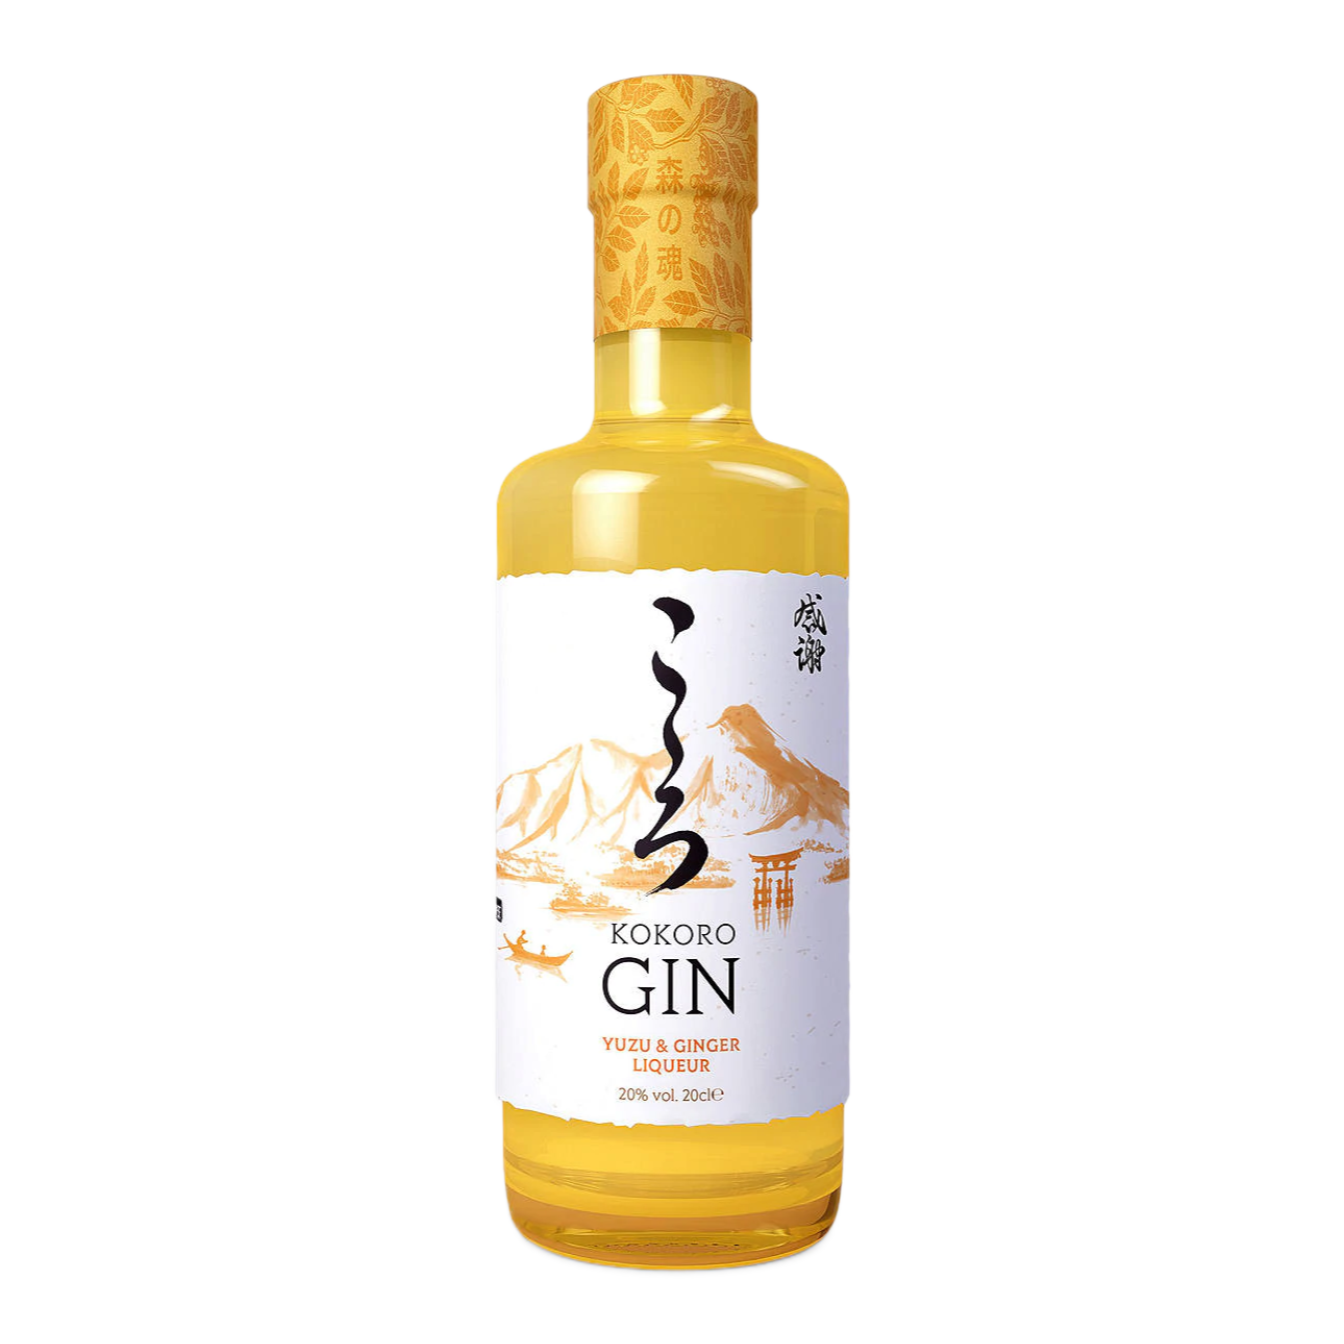 Kokoro Gin Yuzu & Ginger Liqueur